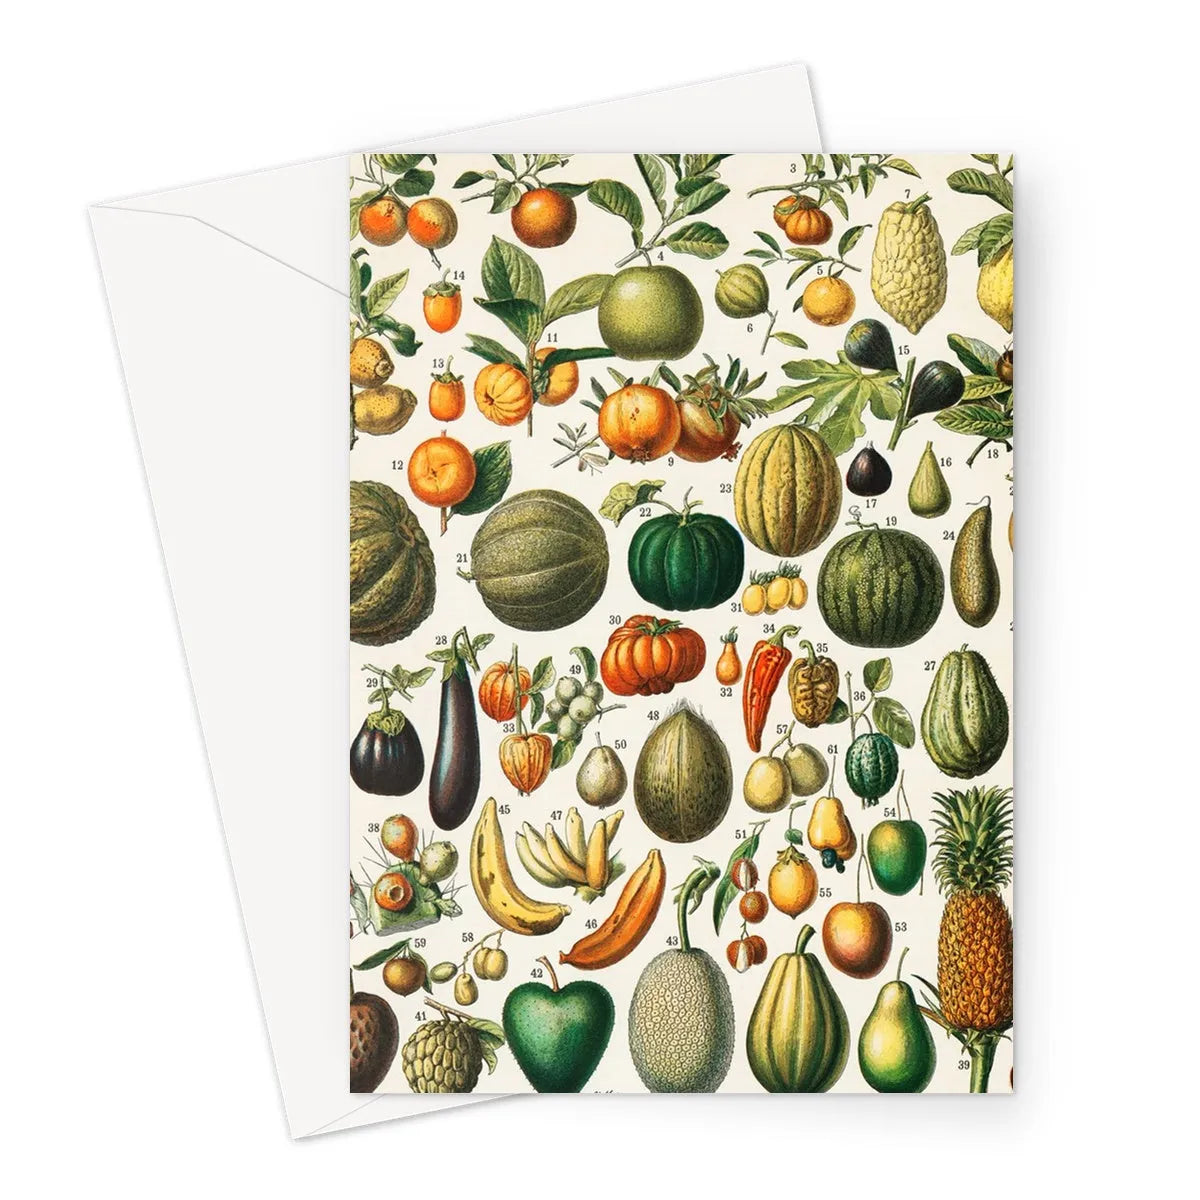 Fruits And Vegetables From Nouveau Larousse Illustre By Larousse Pierre Augé And Claude Greeting Card - A5 Portrait